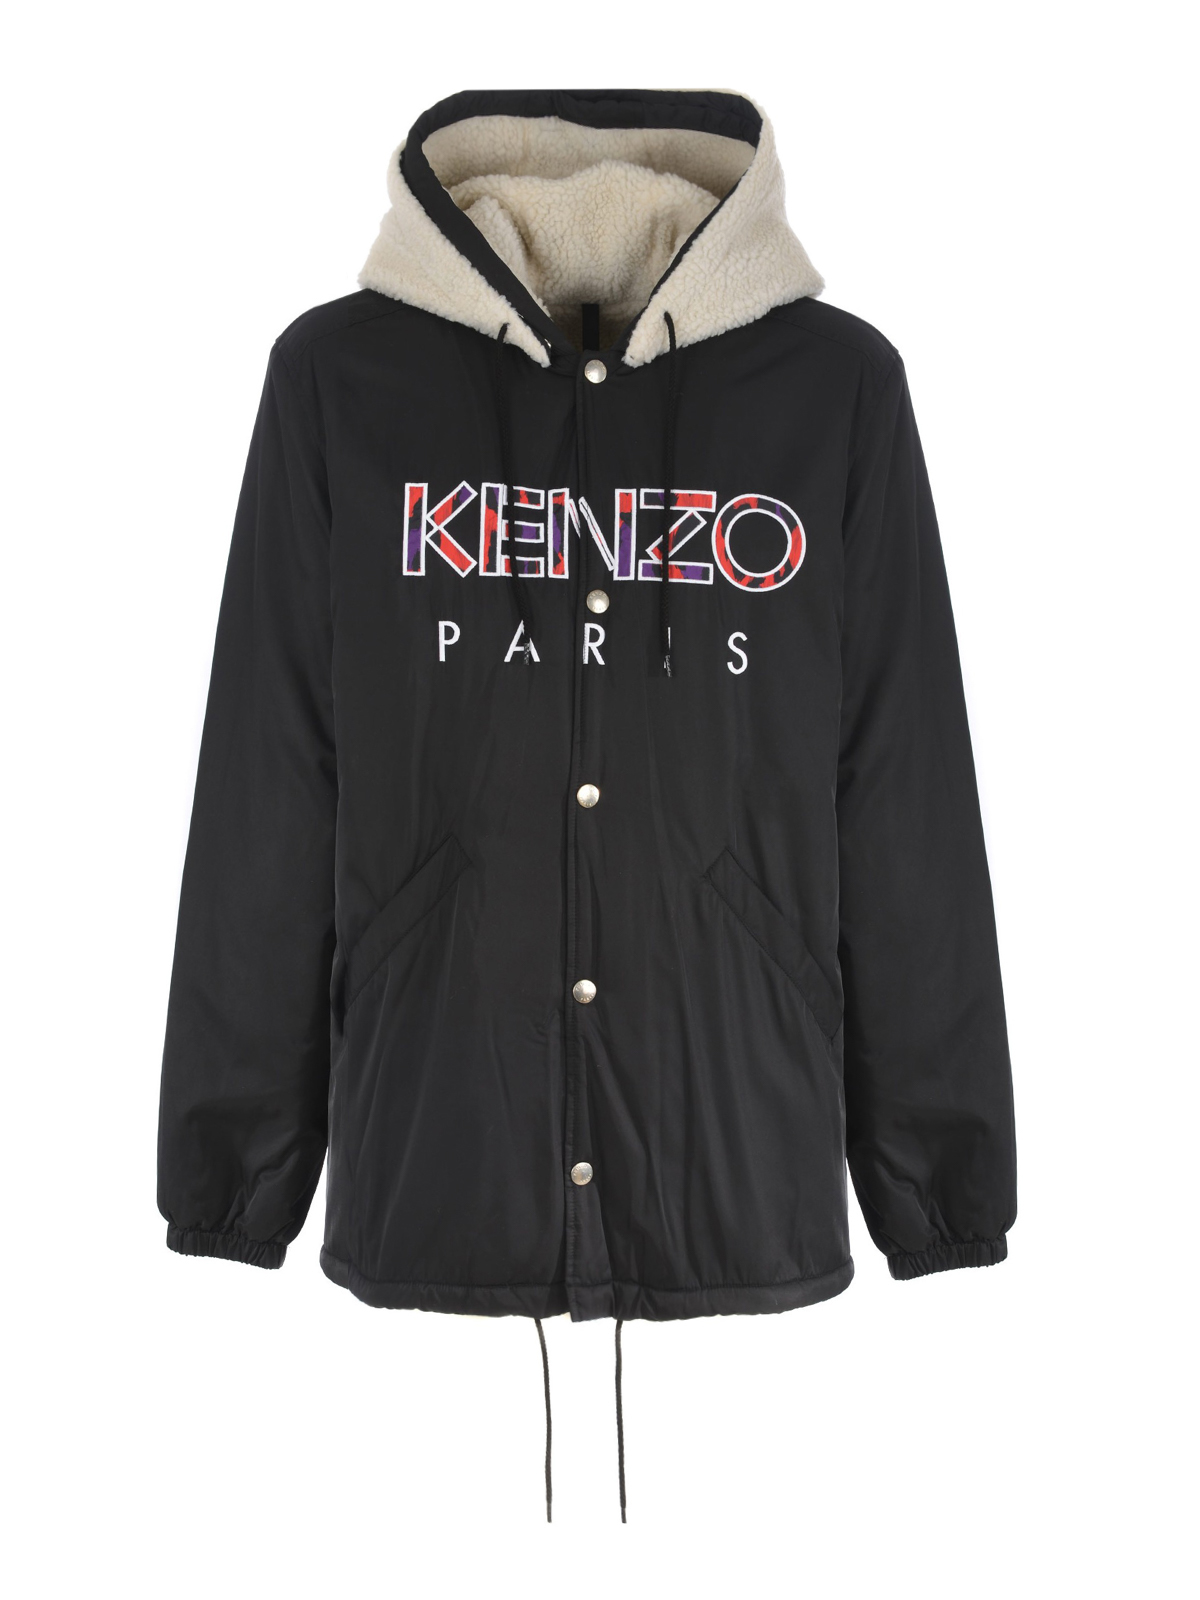 kenzo paris coat